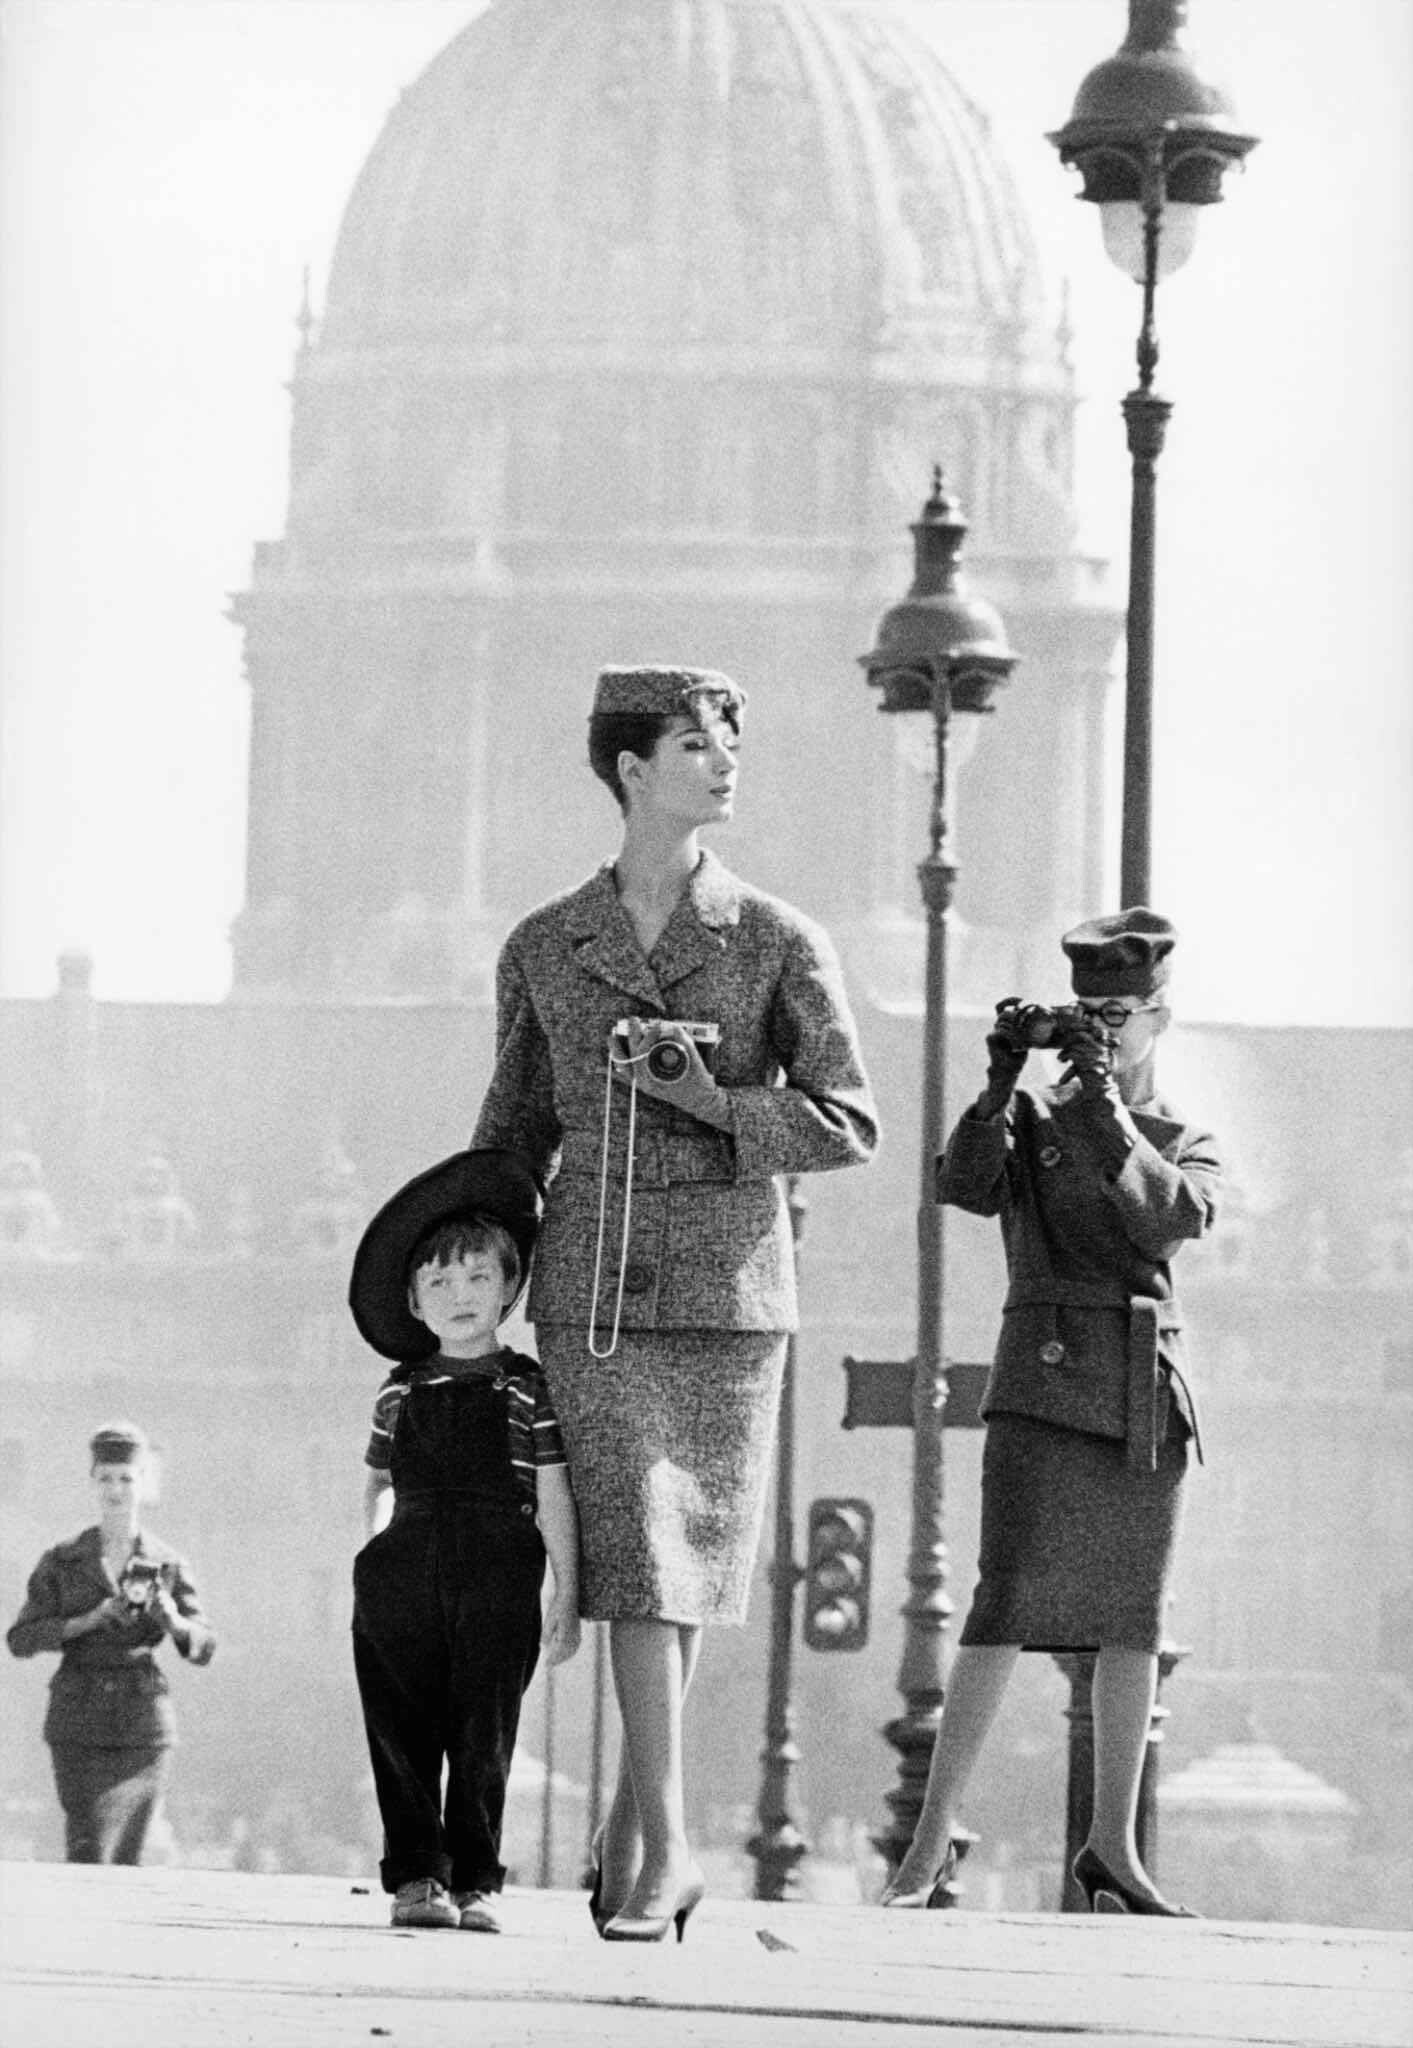 Париж, Jardin des Modes, мода в Доме Инвалидов, 1958 год. Фотограф Франк Хорват